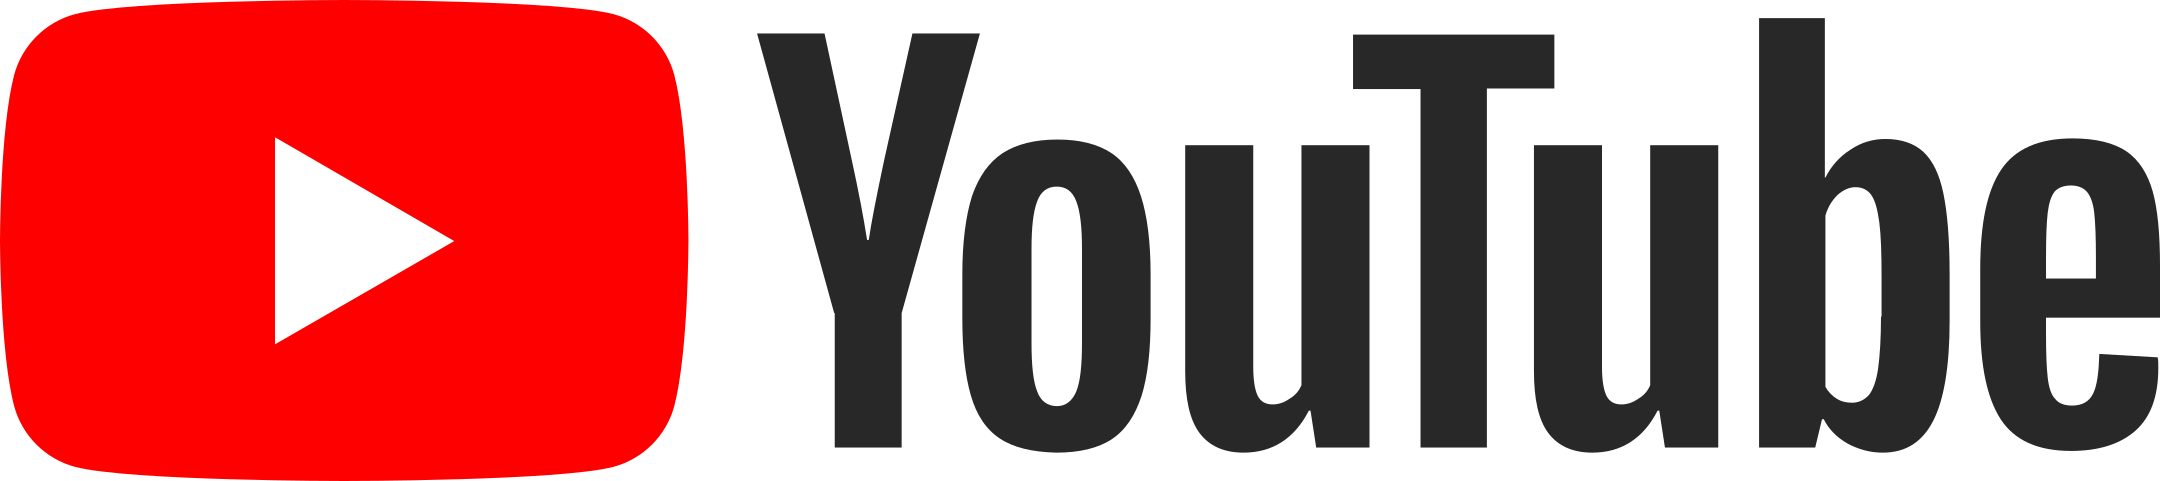 Square YouTube Logo Free PNG Image